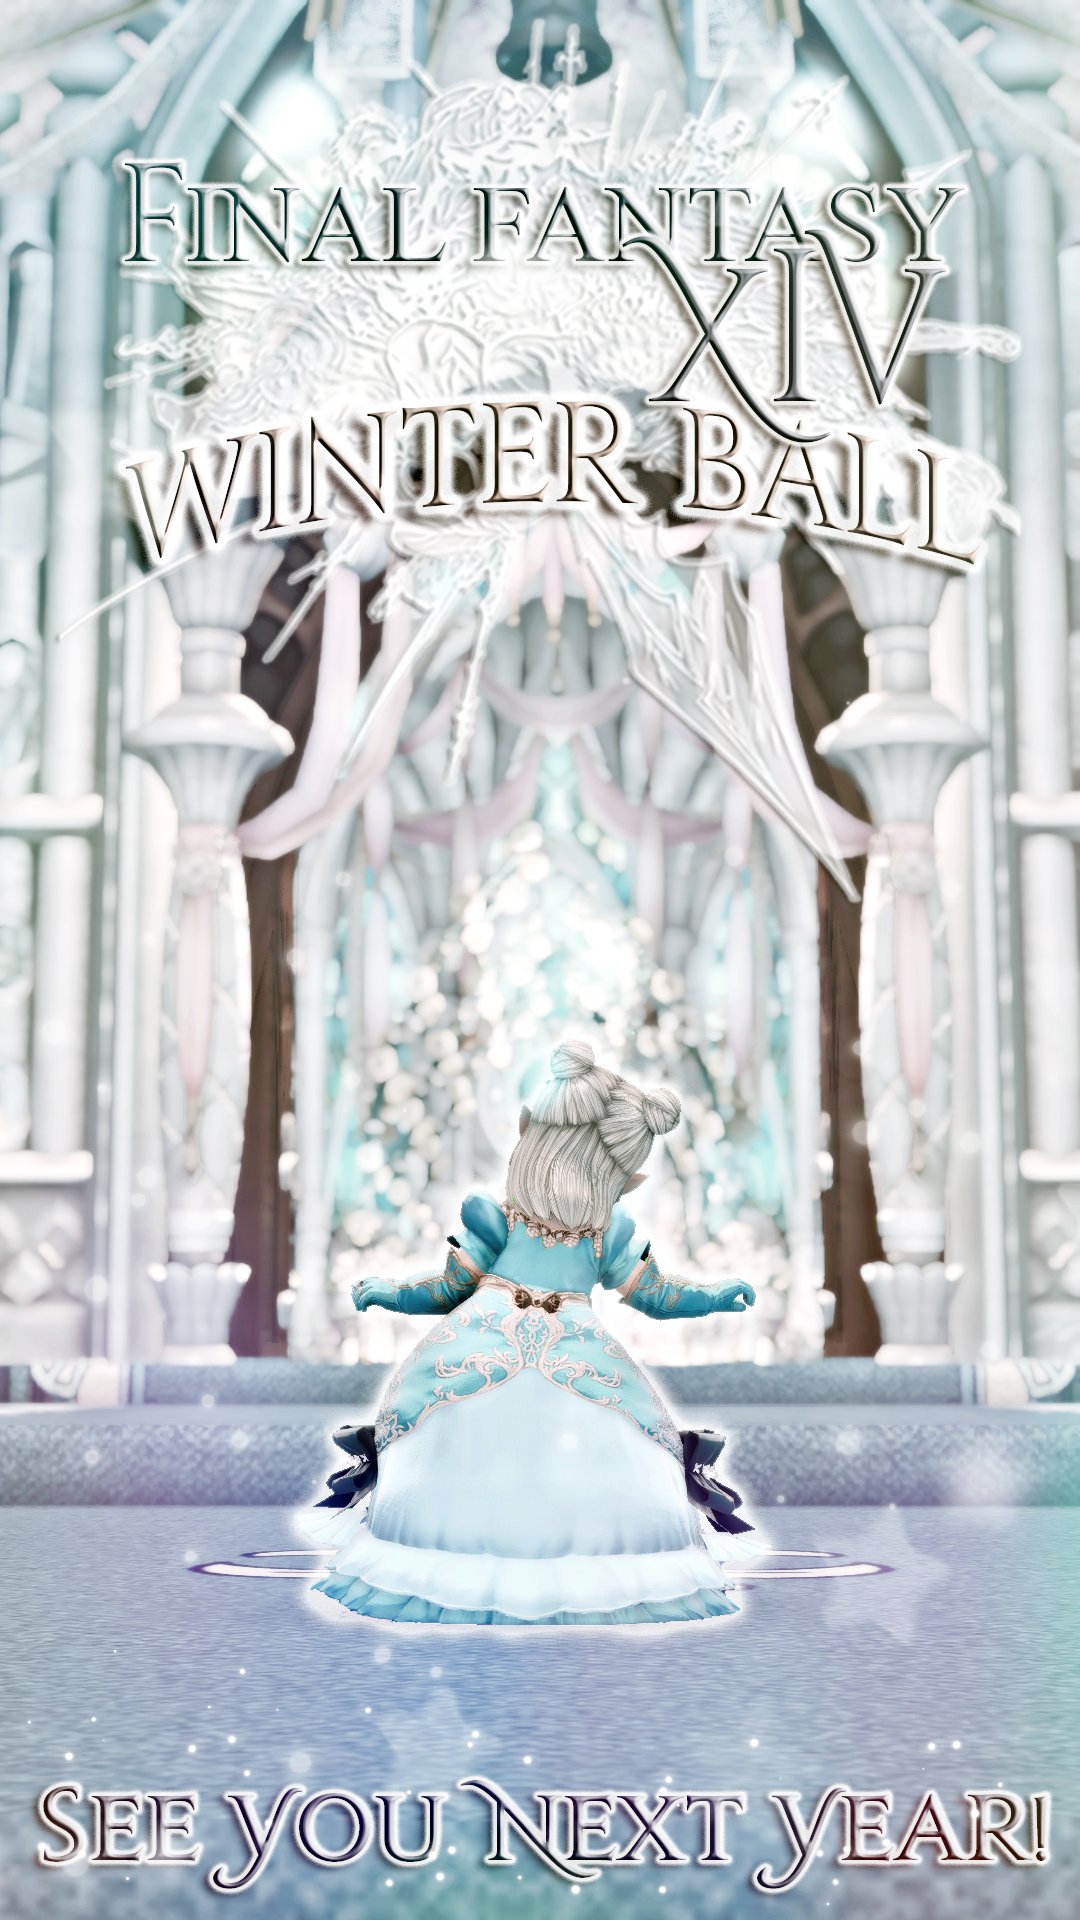 FFXIV Winter Ball (ffxivwinterball) / Twitter